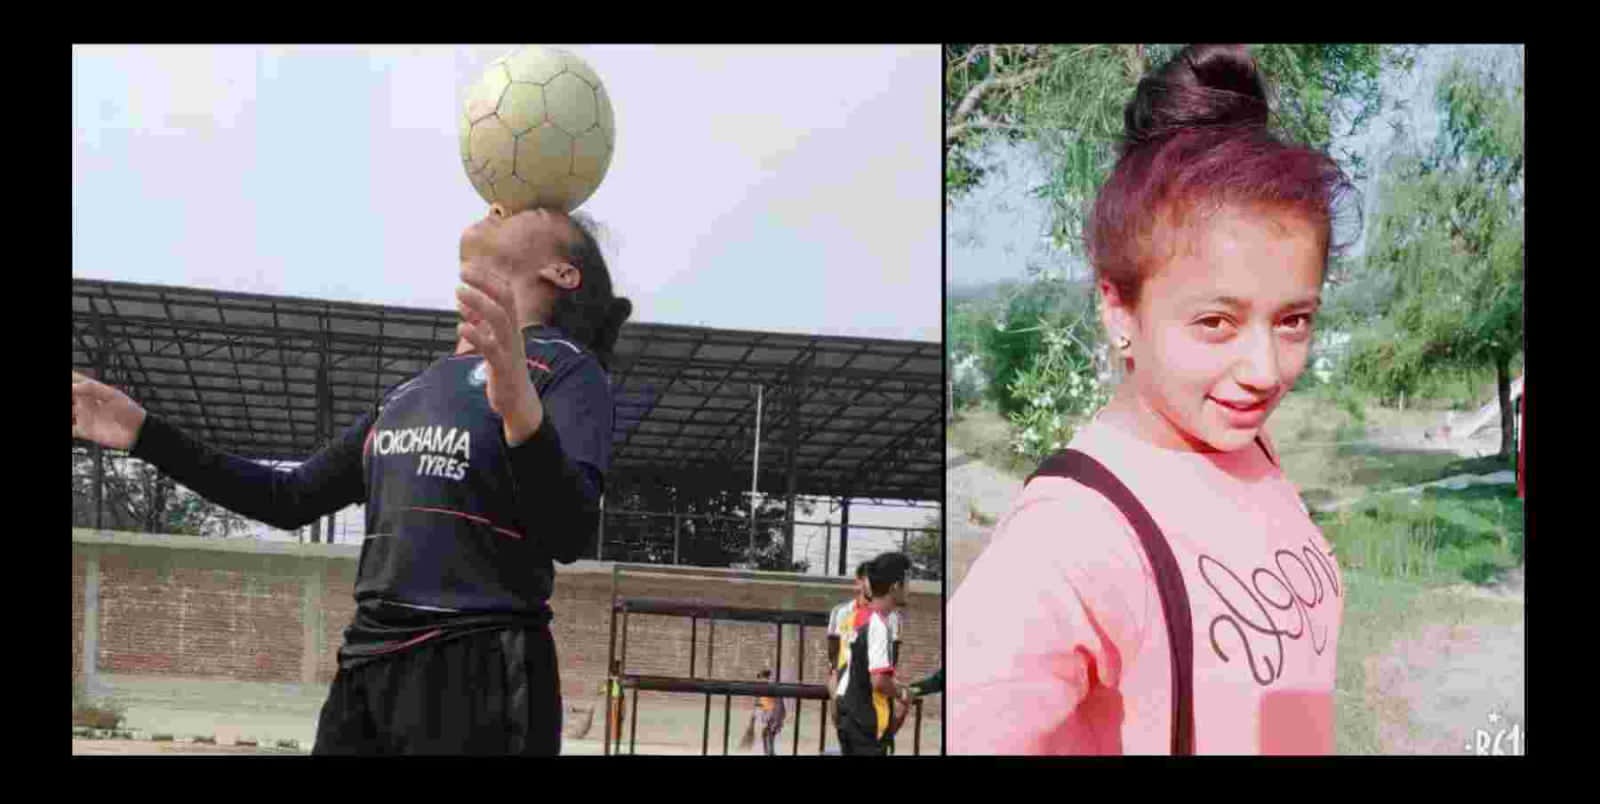 Uttarakhand:Bhagwati Chauhan of Almora won the 'Golden Boot' by scoring 12 goals in the football tournament in Delhi.